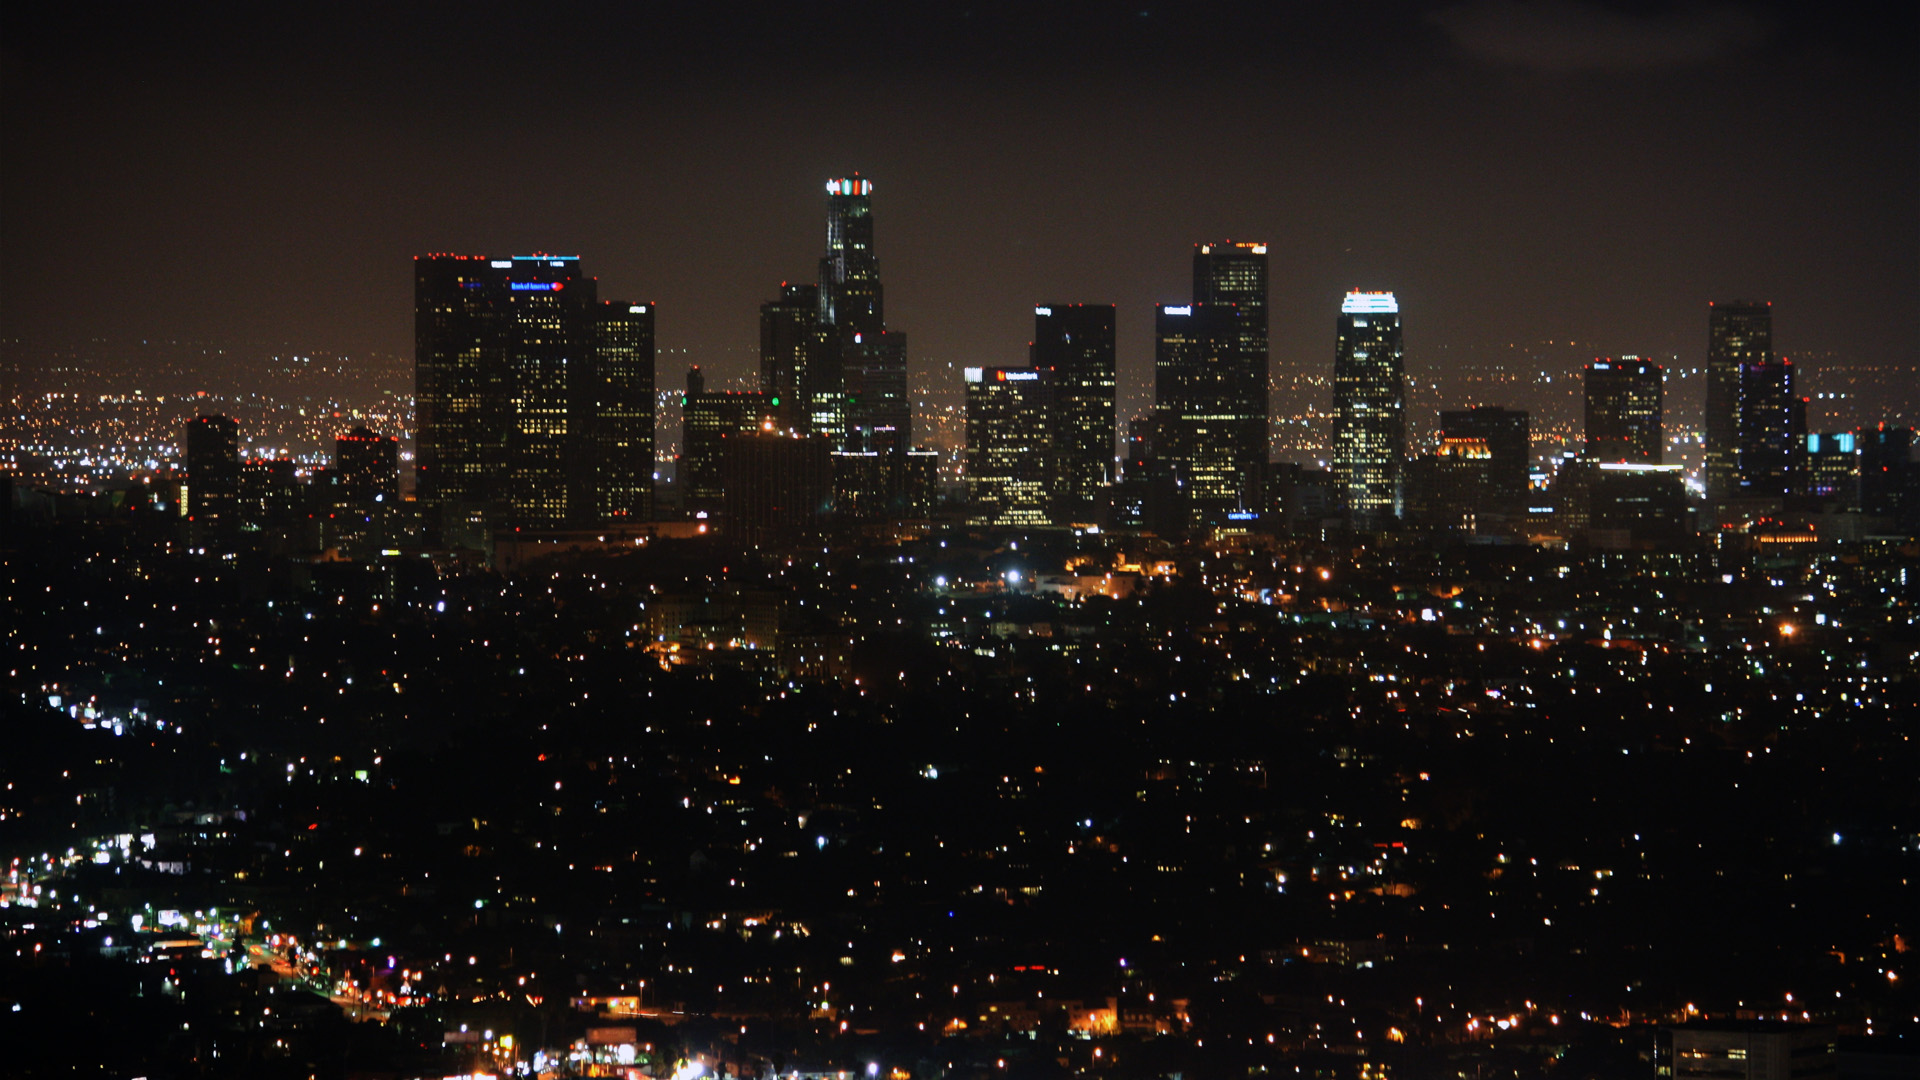 LA Progresses Towards Becoming A Sustainable City